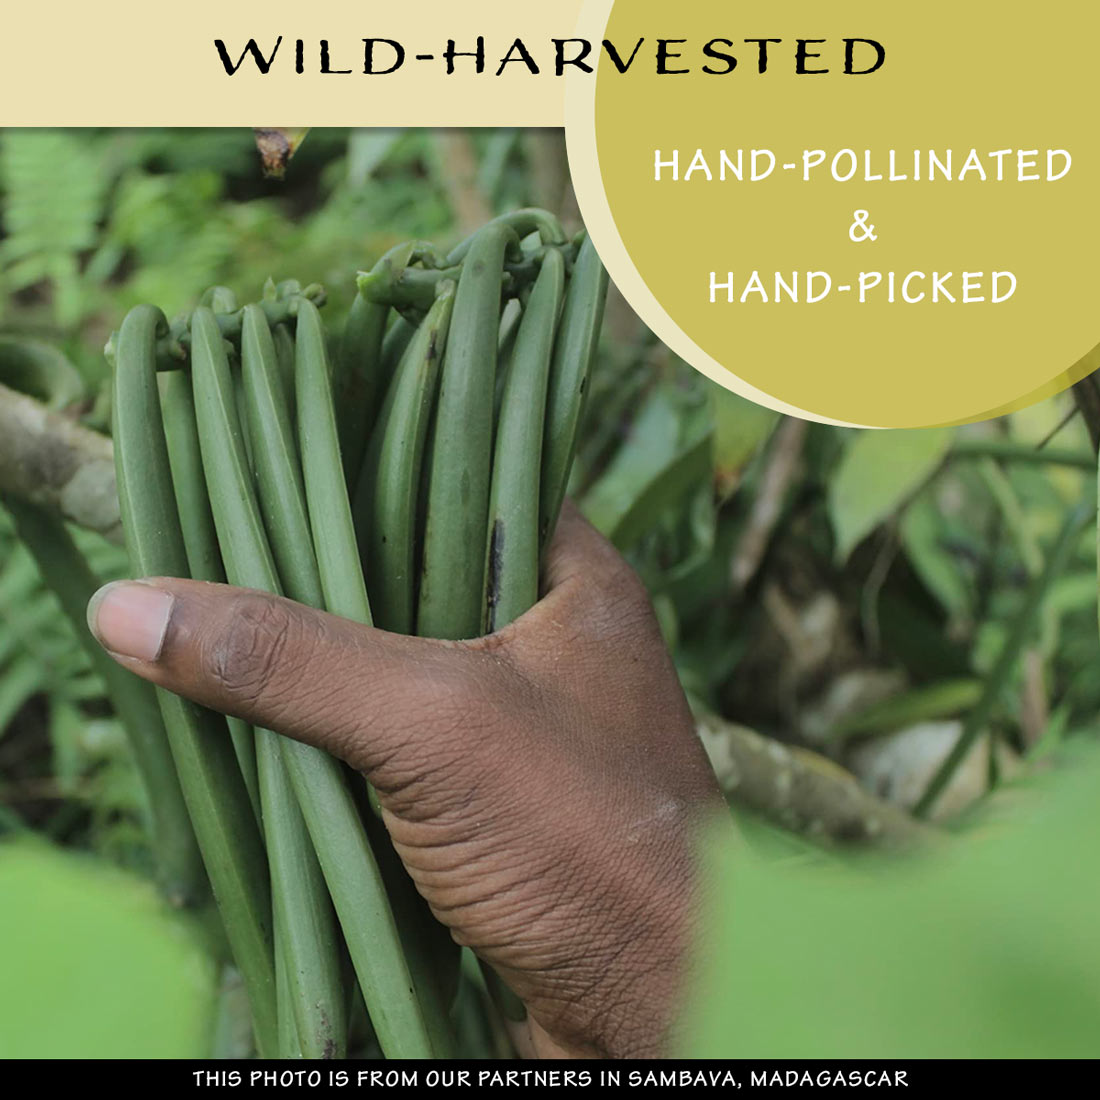 [LIQUIDATION] Madagascar Ground Vanilla Beans: MEDIUM GRIND—Planifolia Smooth & Buttery Planifolia